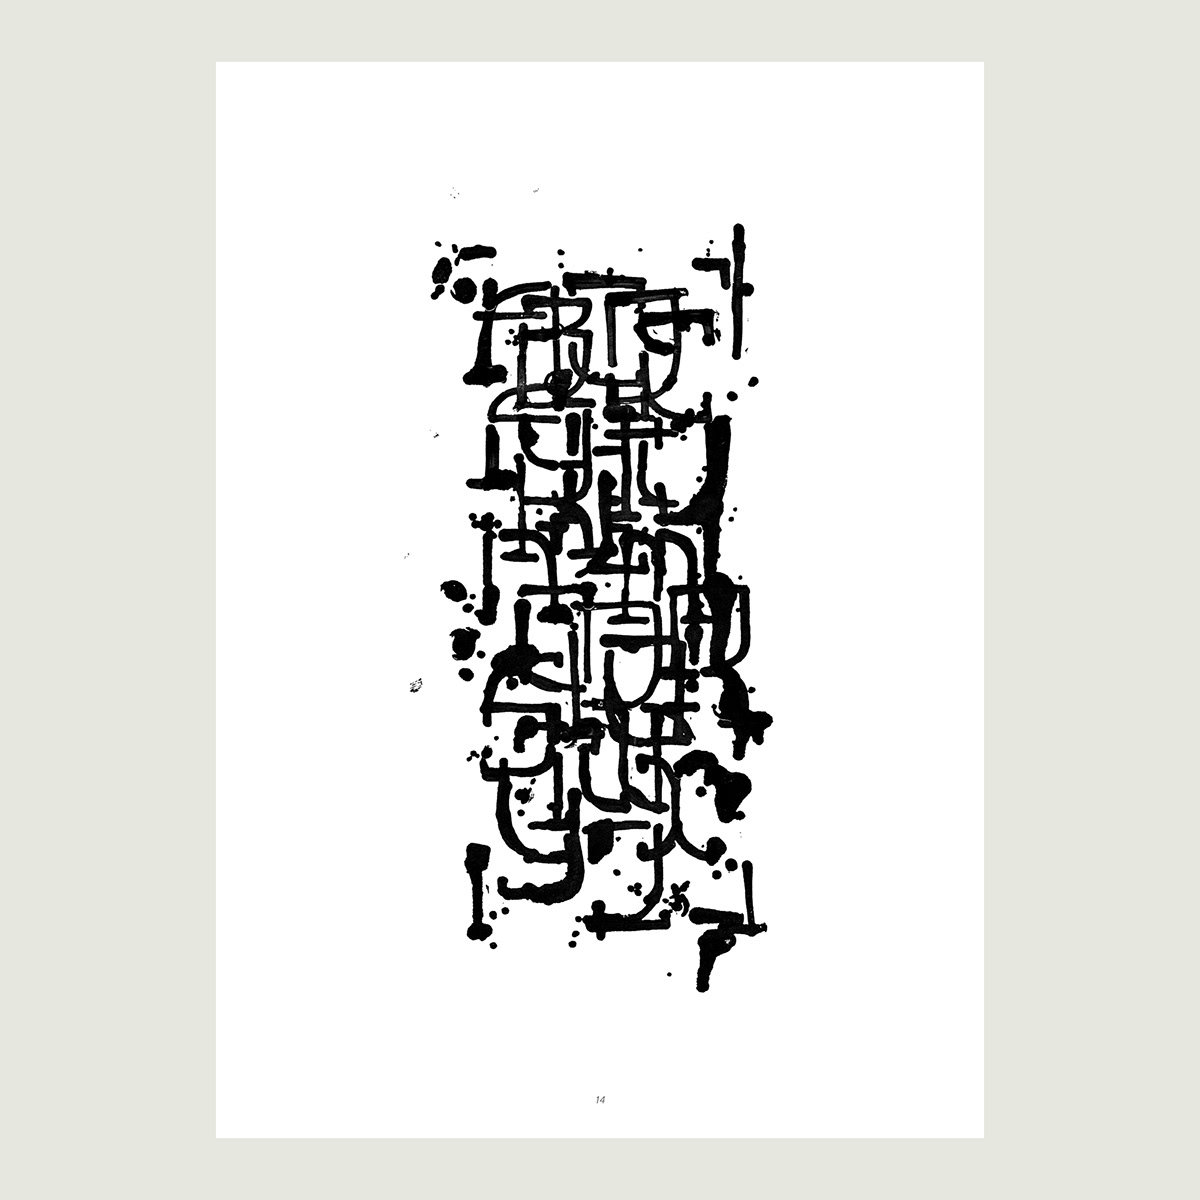 Hubert pasieczny hubert pasieczny type Typo Poster letters alphabet